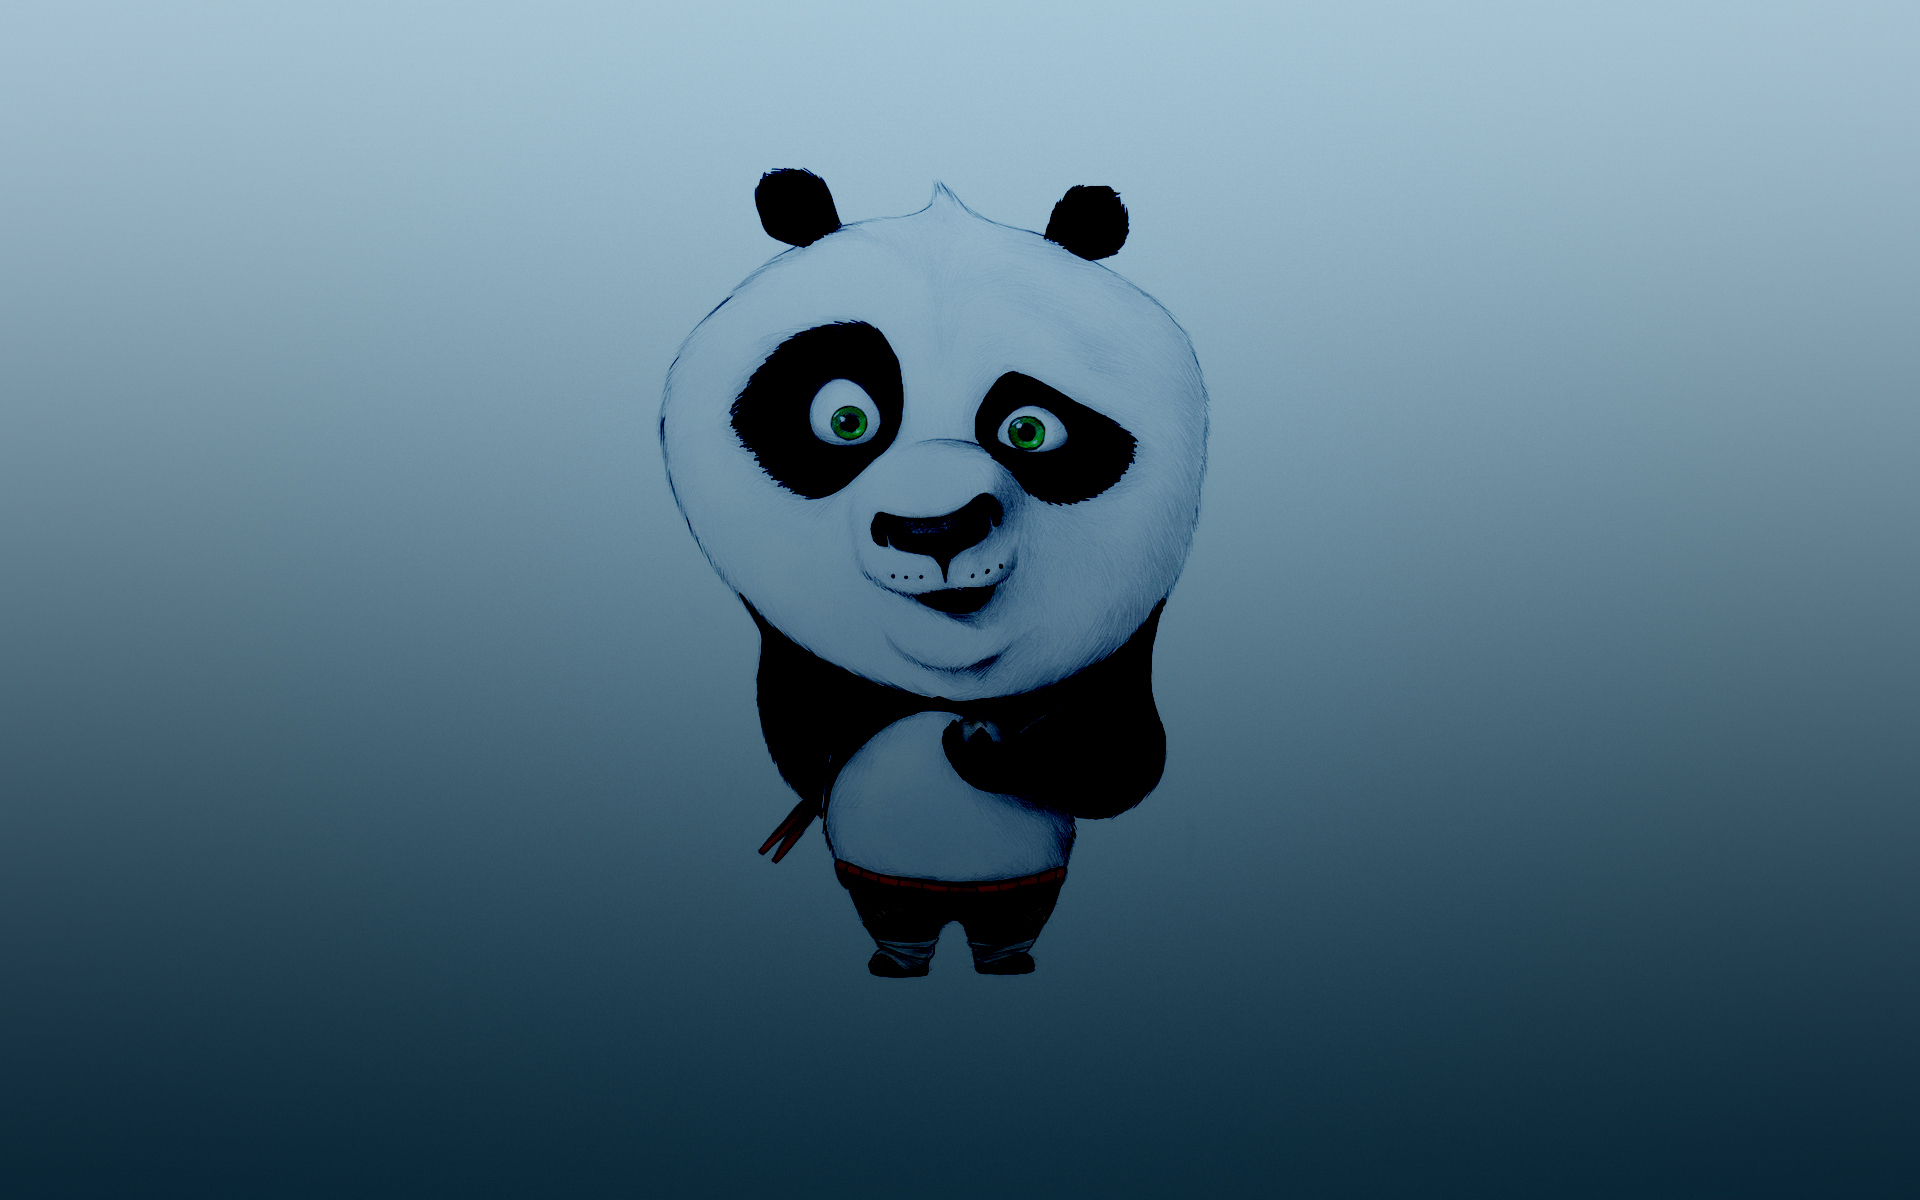 17064 descargar imagen pandas, dibujos animados, animales, kung fu panda, fondo, azul: fondos de pantalla y protectores de pantalla gratis